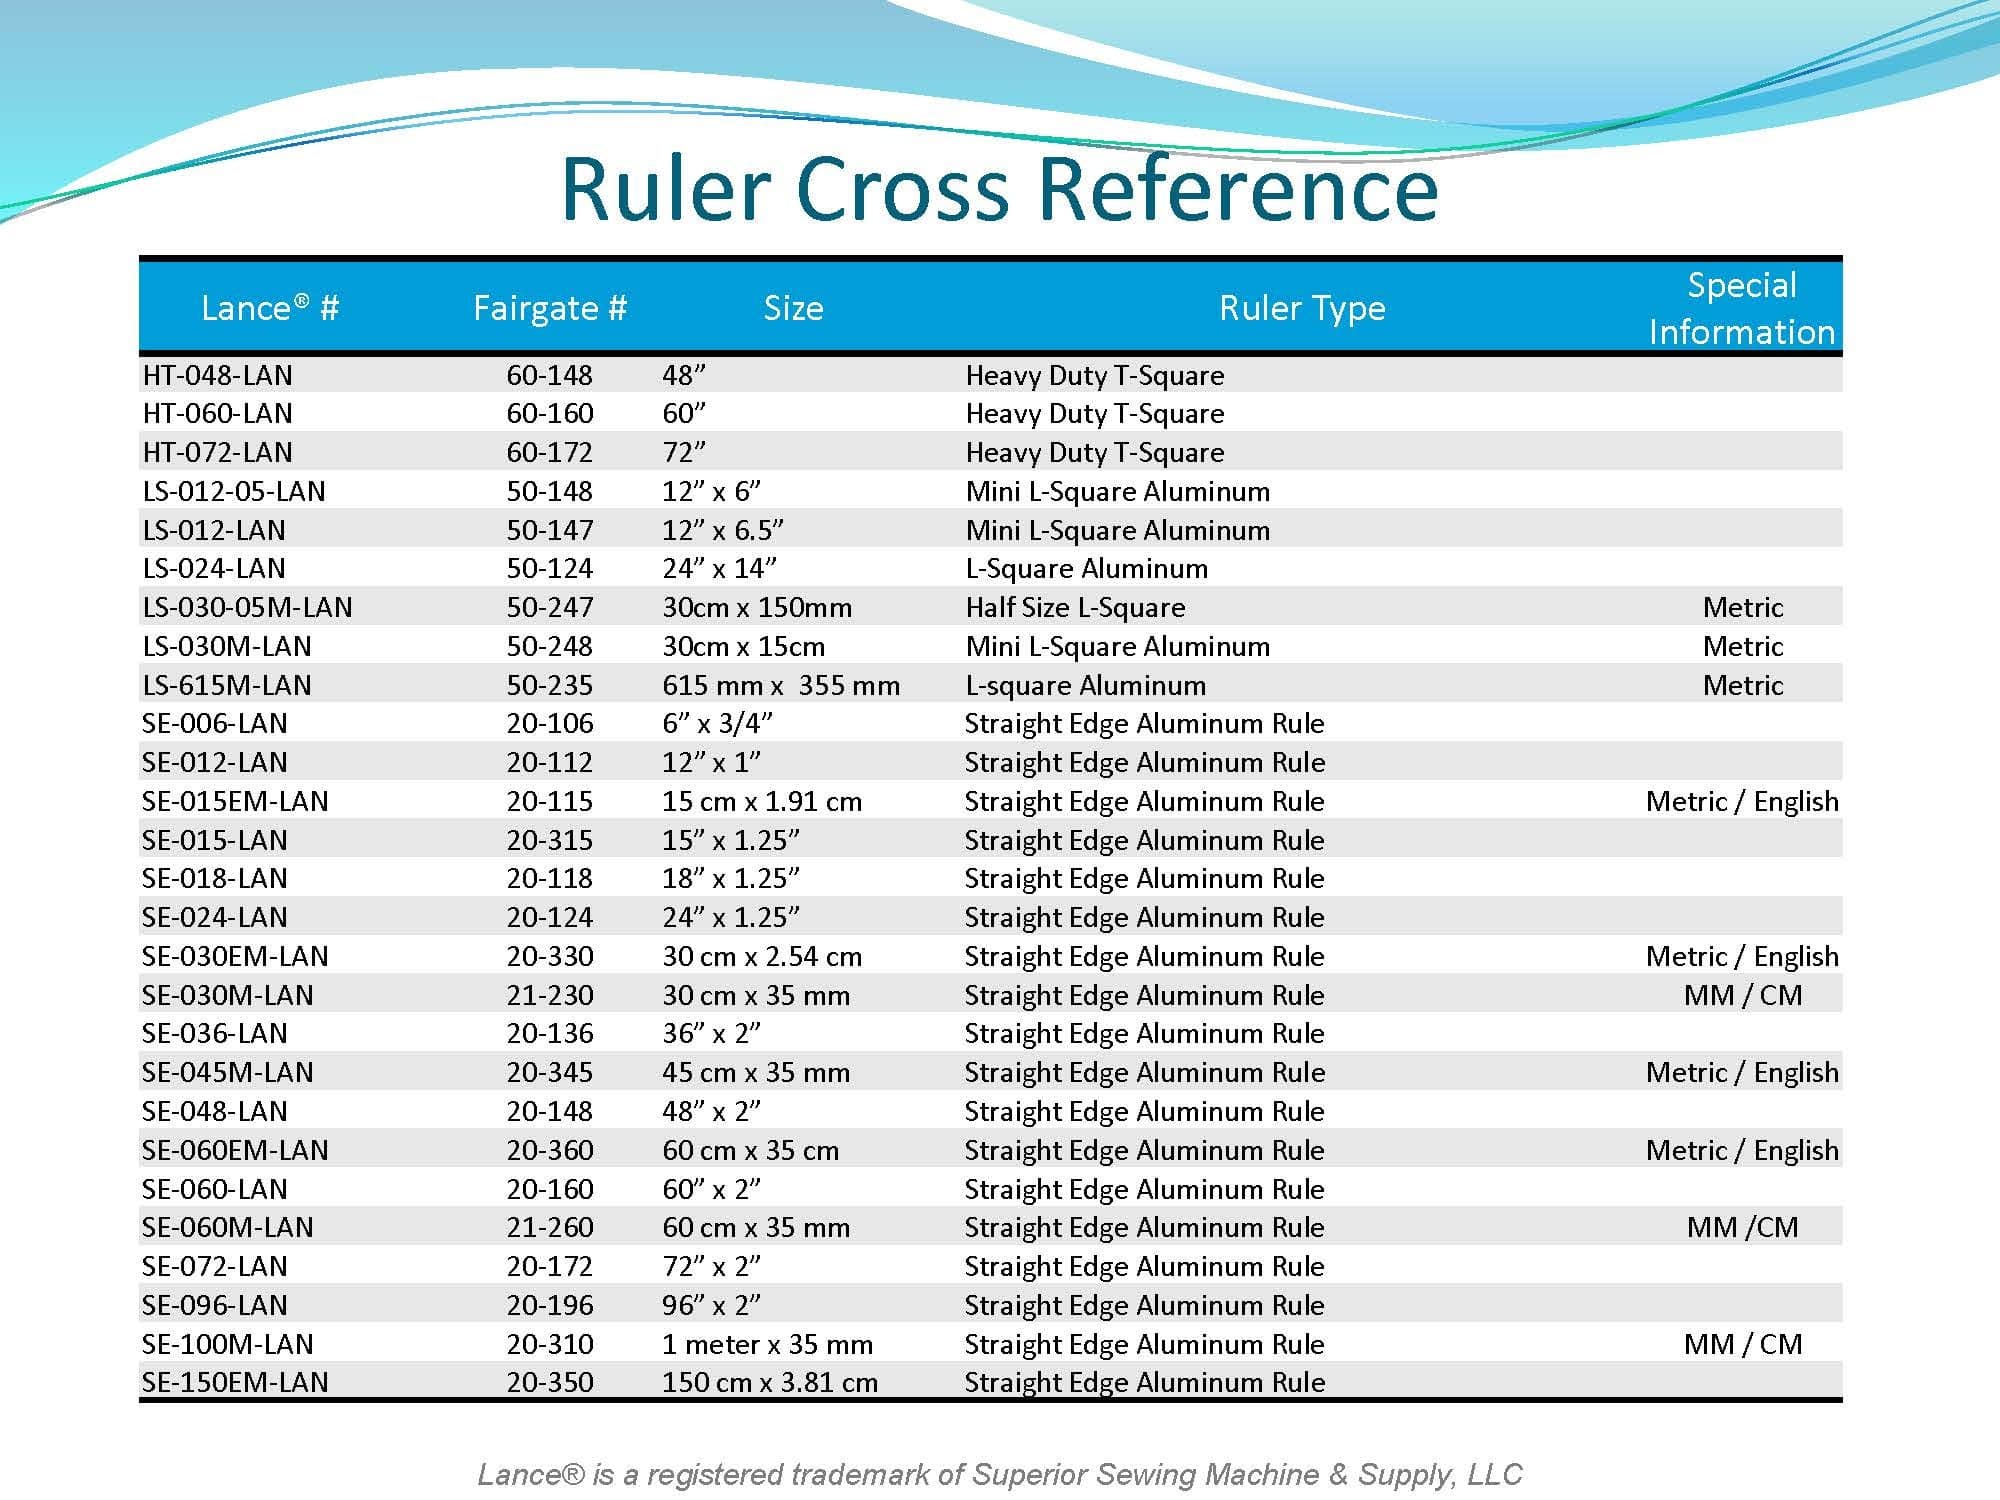 LANCE RULER CROSS REFERENCE
FAIRGATE # to LANCE #
COMPLETE LANCE RULER LIST
